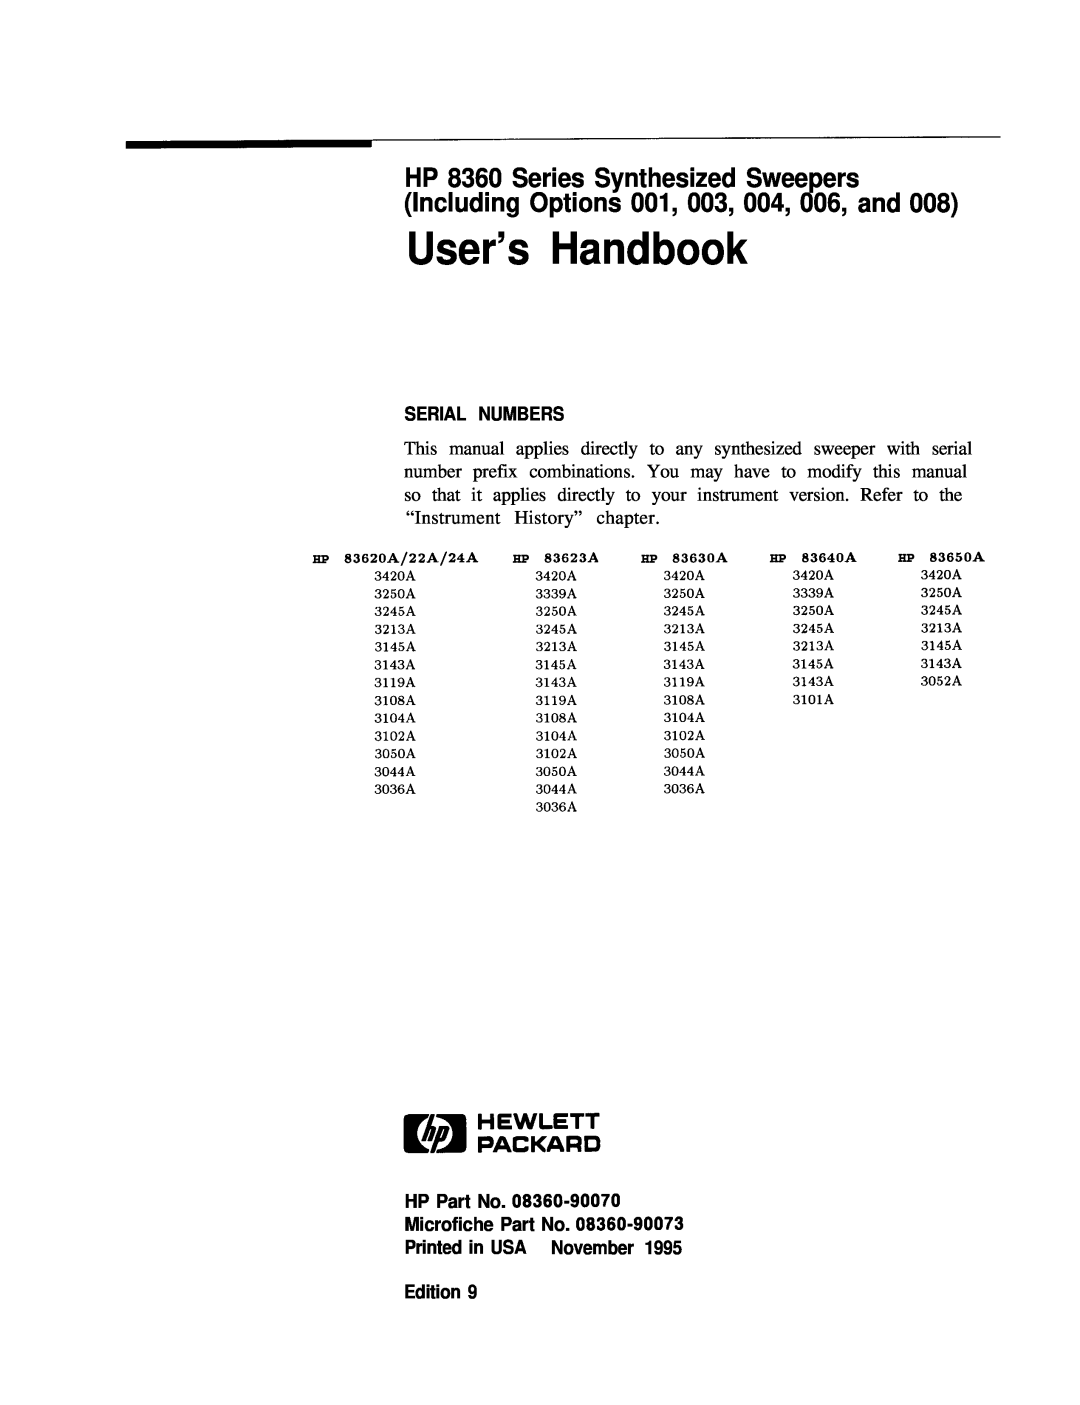 HP 24A, 83620A, 22A manual User’s Handbook, Serial Numbers 